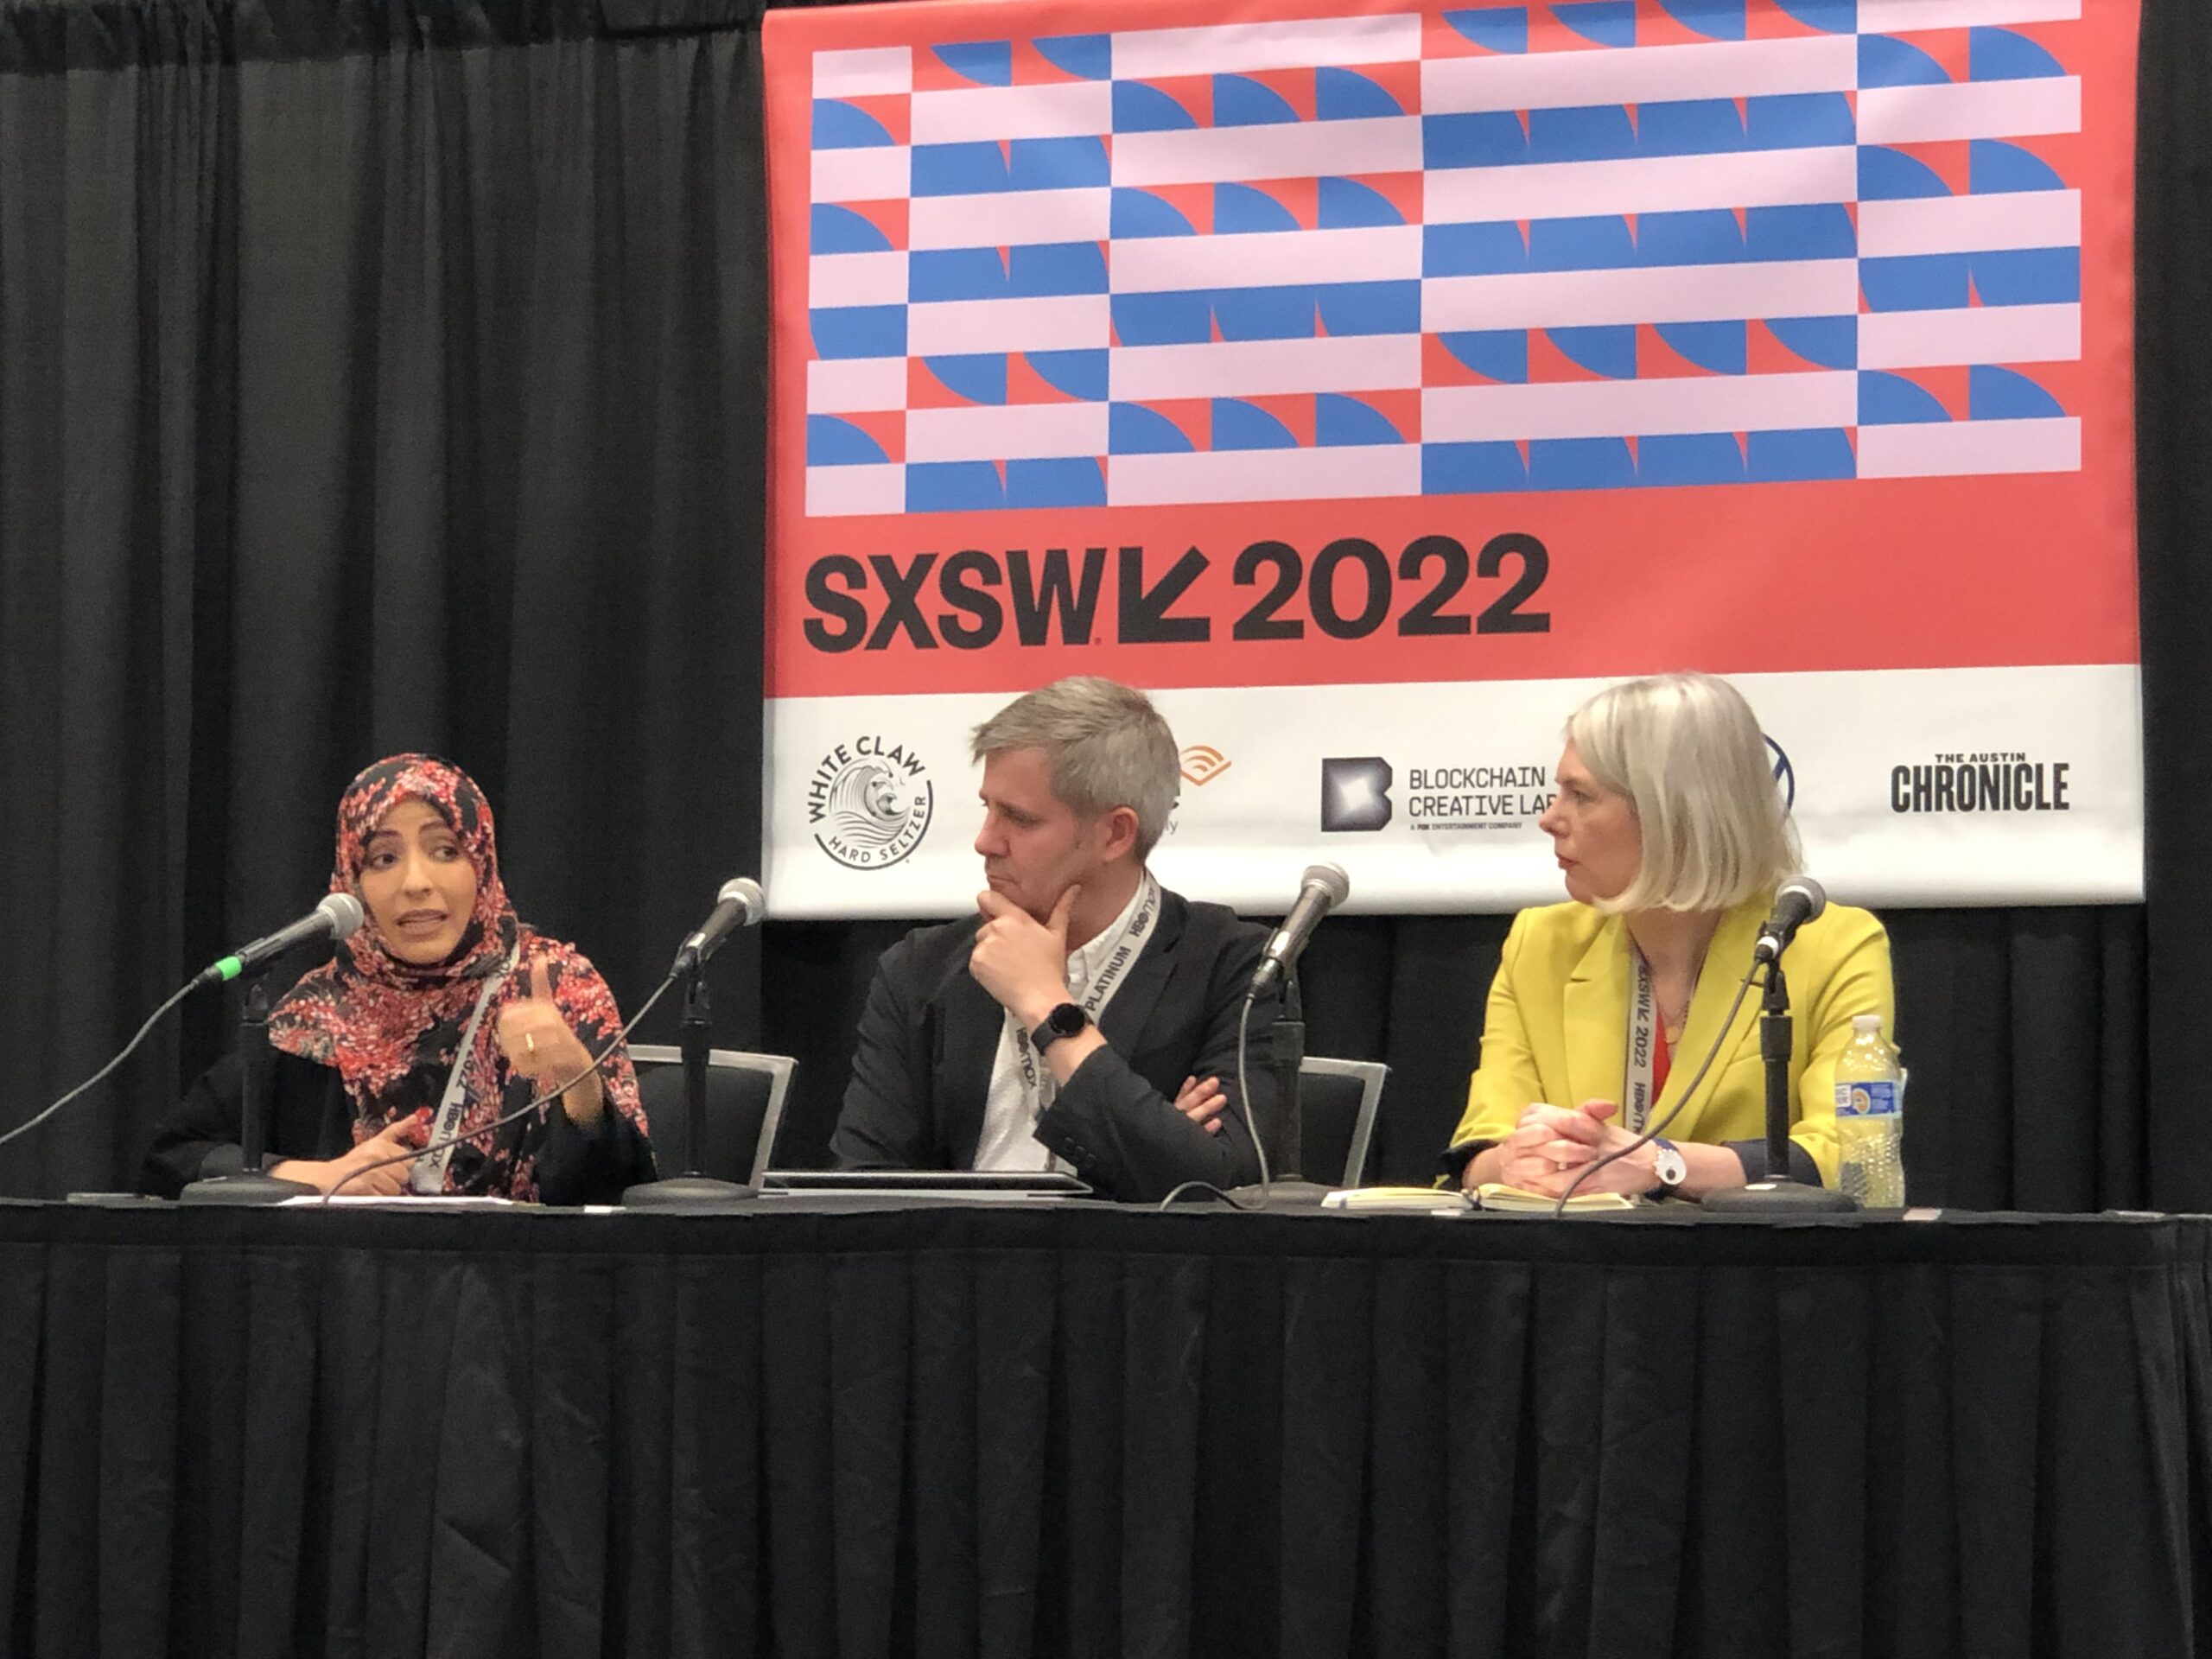 From left to right - Tawakkol Karman, Phil Howard, and Gina Neff at SXSW